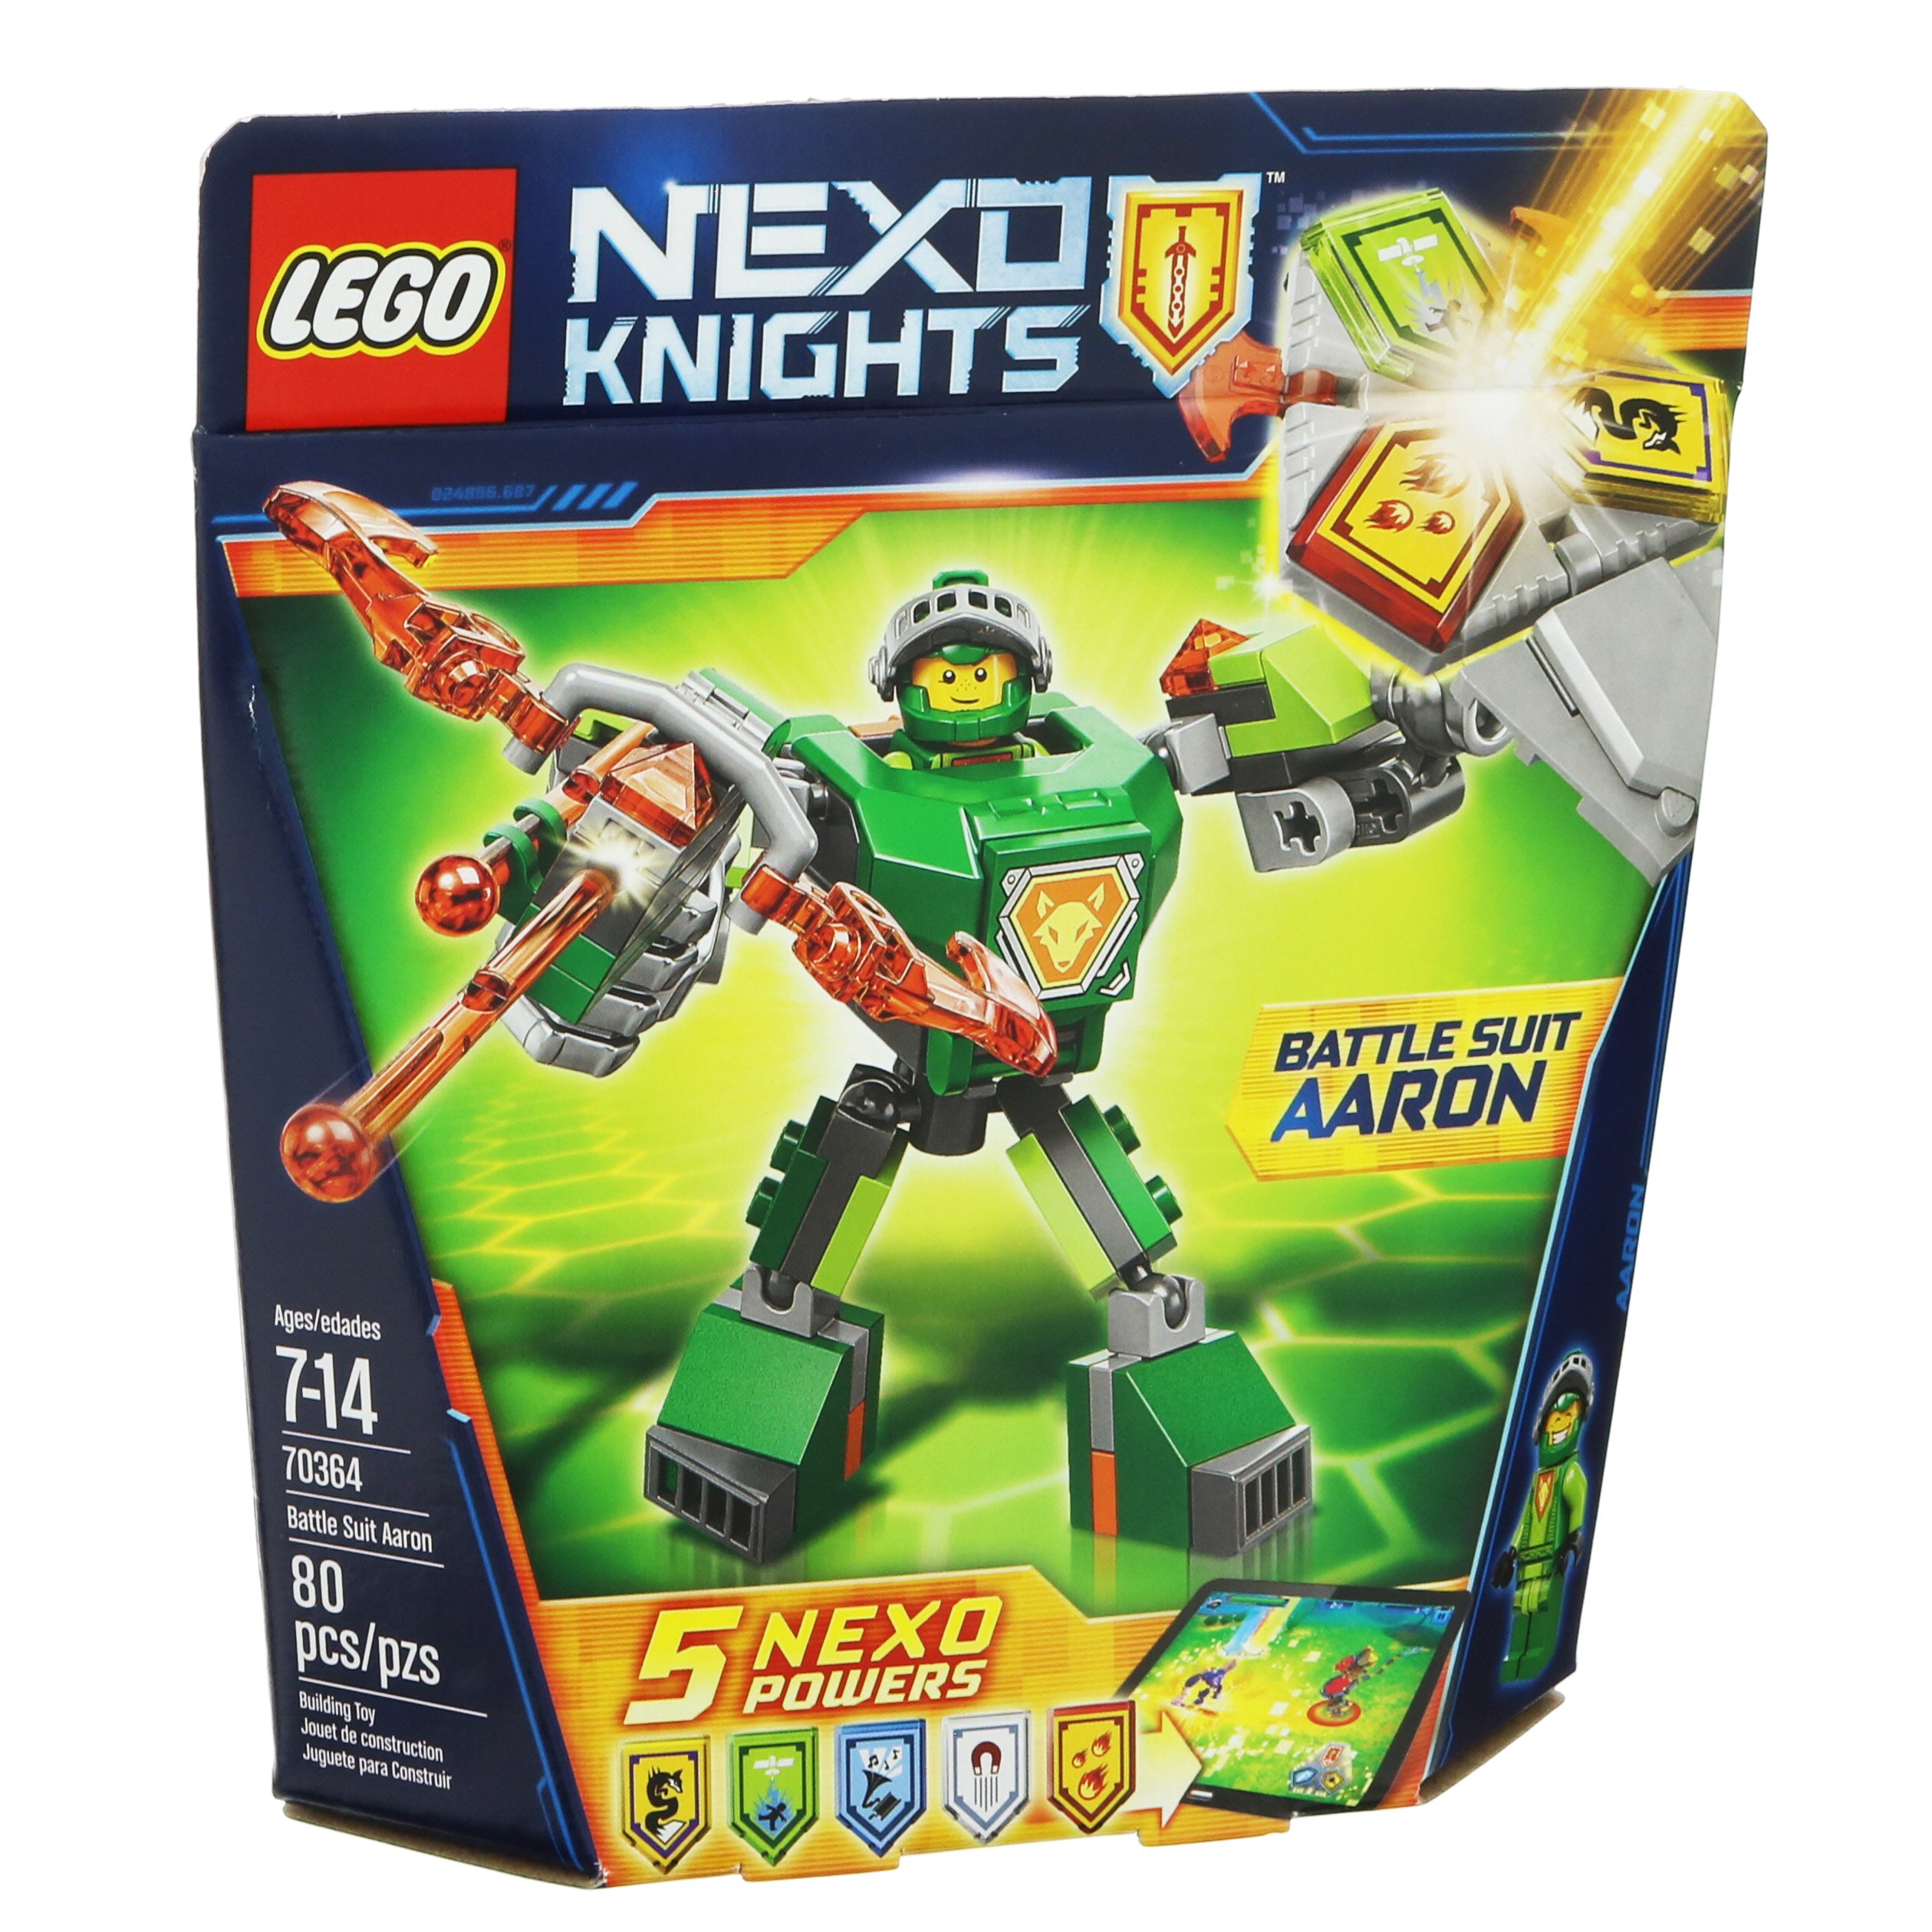 Nexo Knights Battle Suit Aaron Shop Lego & Blocks at H-E-B